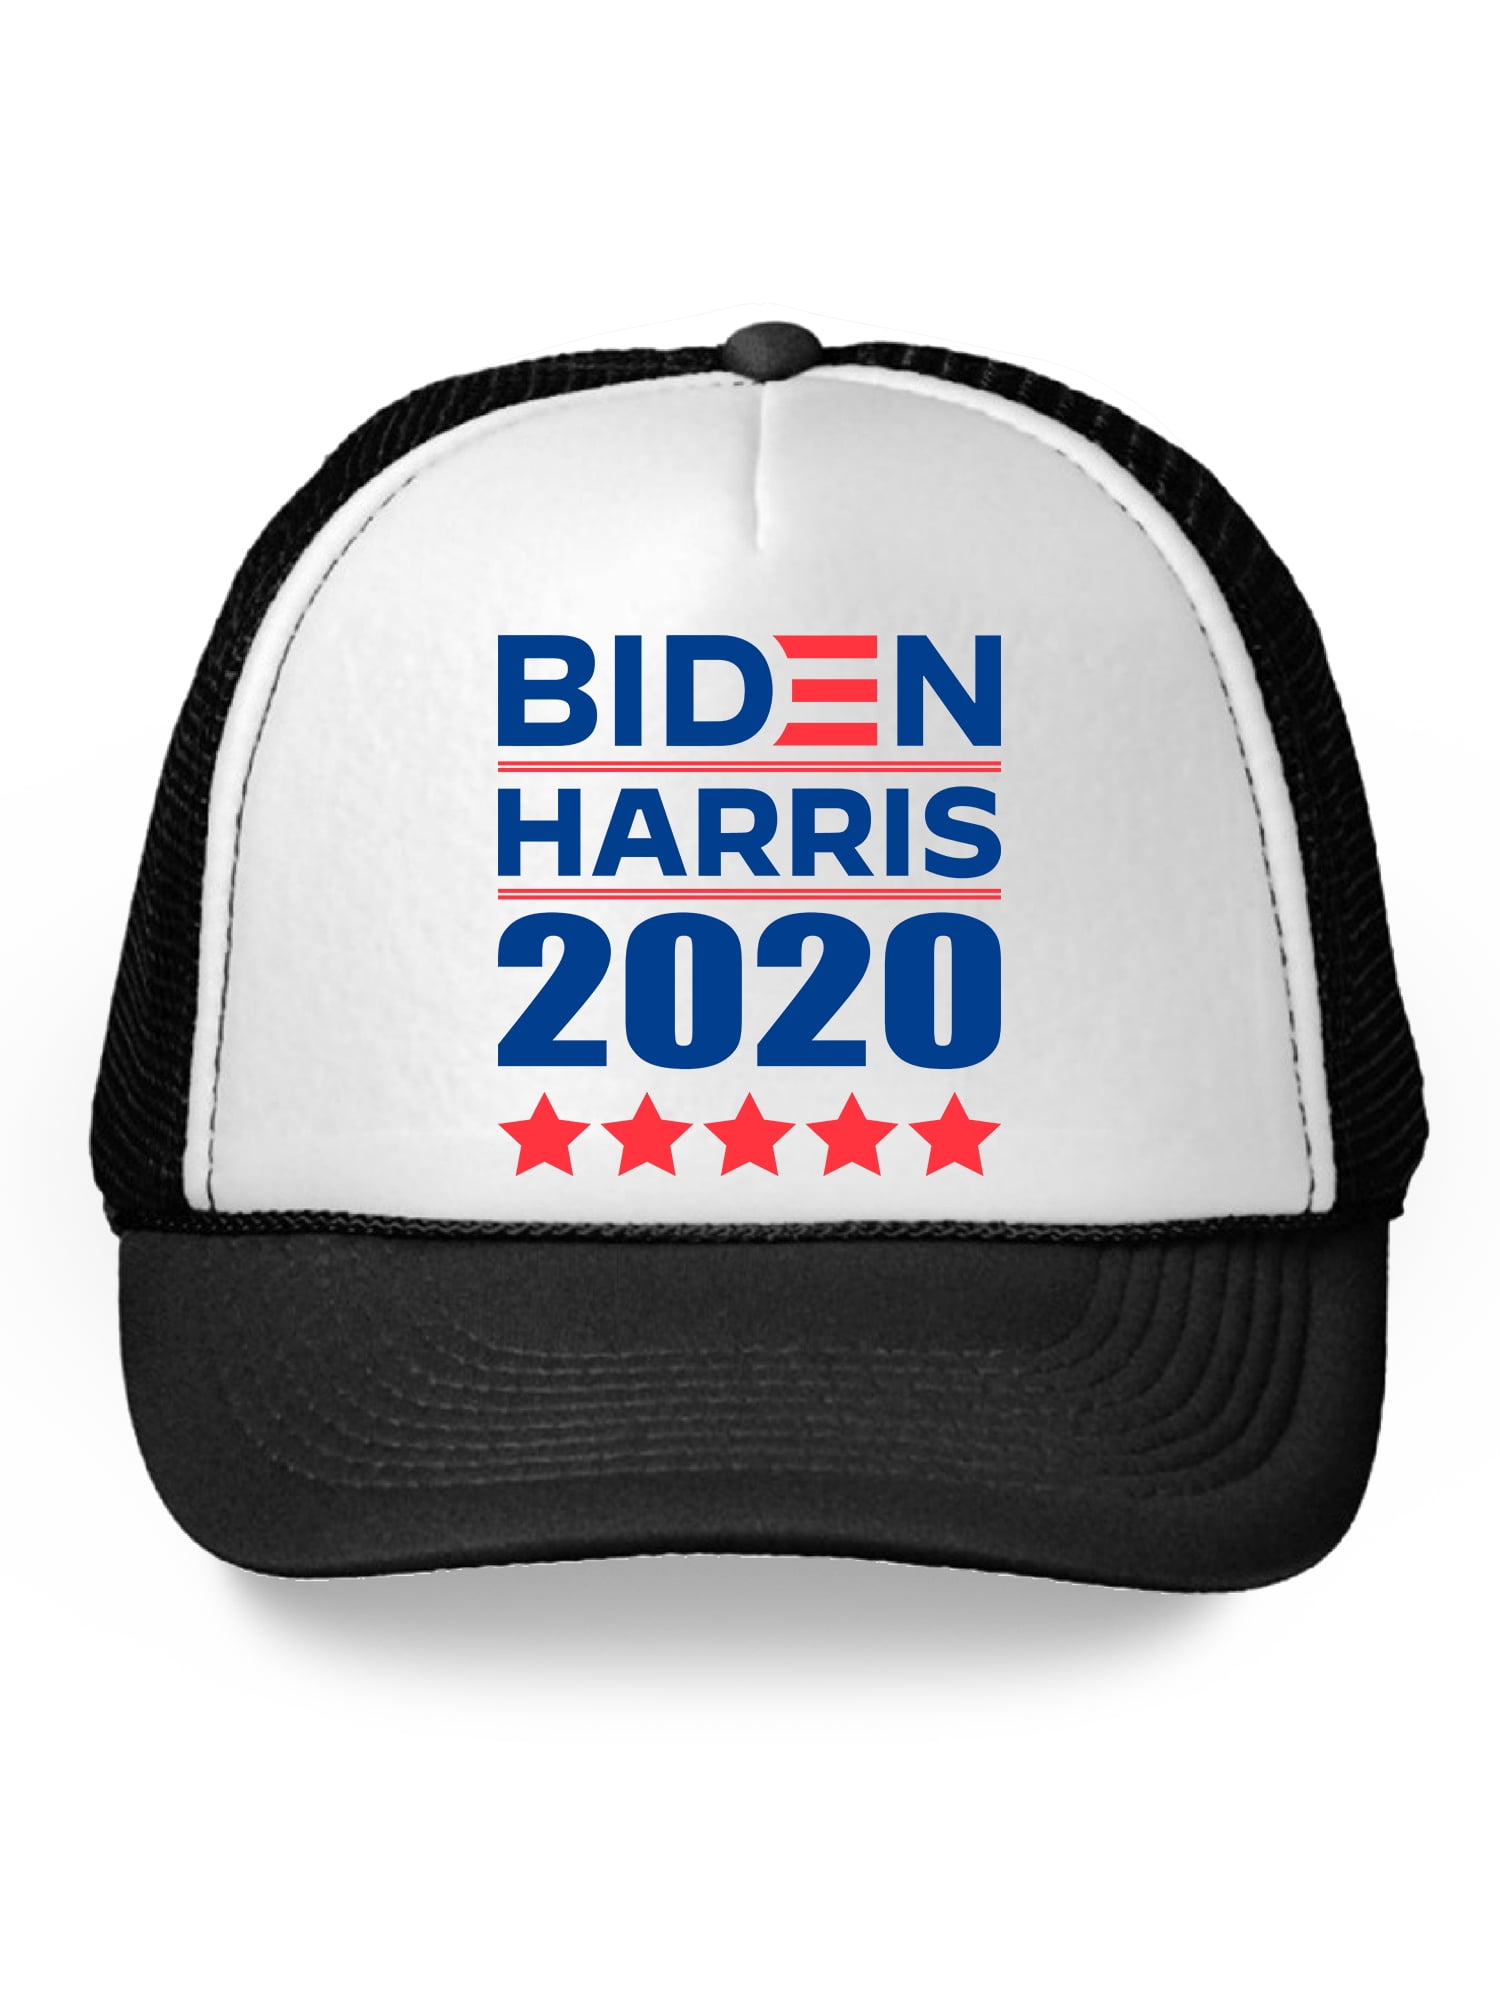 Joe Biden for President 2020 Embroidery Baseball Cap Hat Adjustable A+++. 